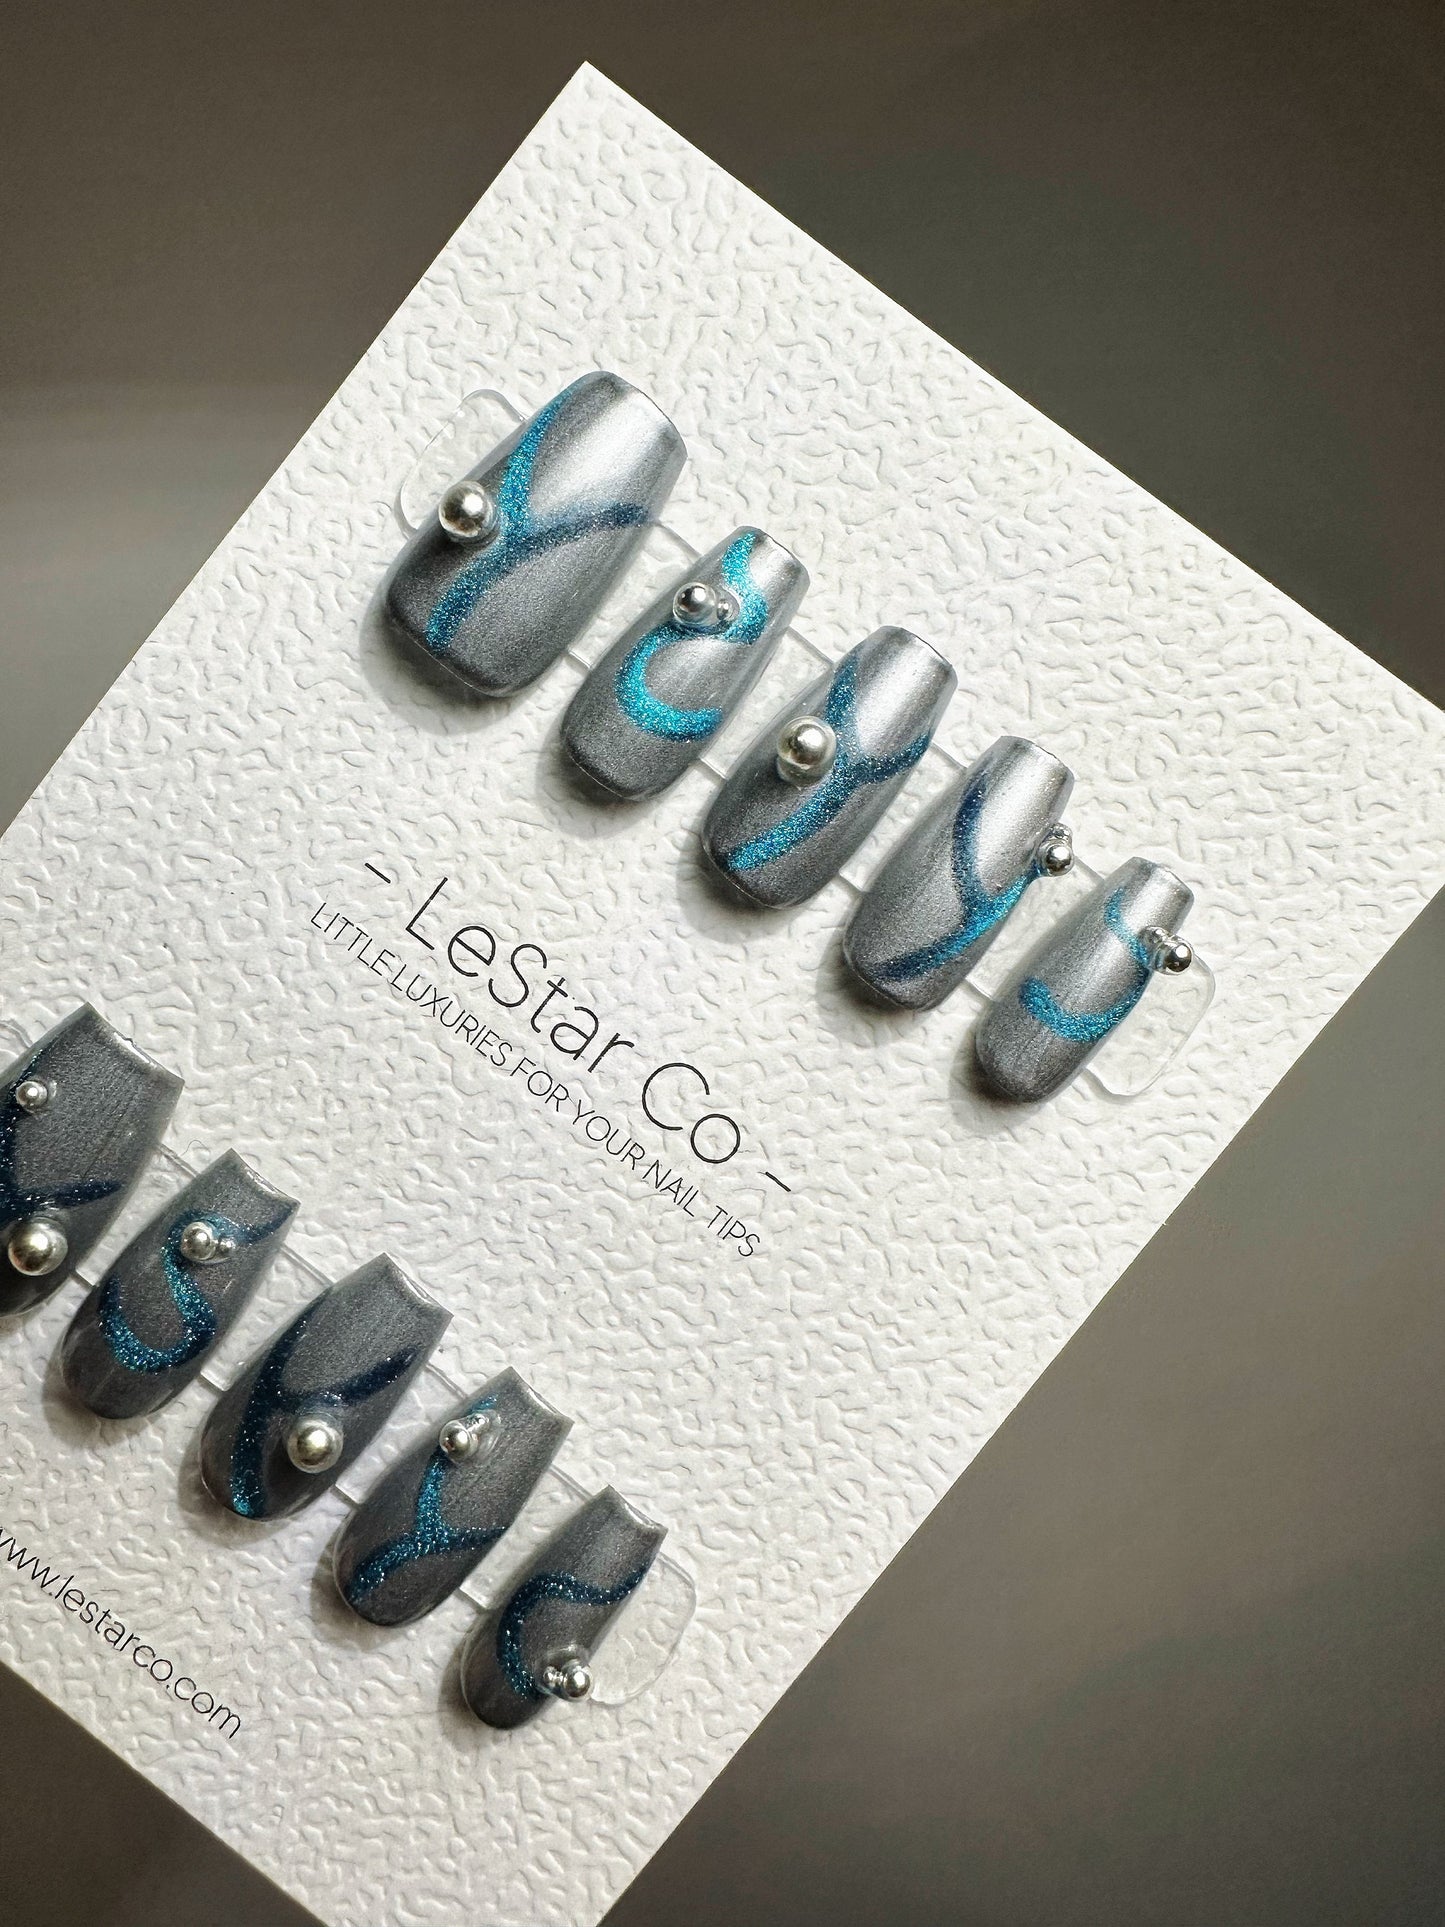 Reusable Replay Silver Chrome Blue Cat Eye | Premium Press on Nails Gel | Fake Nails | Cute Fun Colorful Gel Nail Artist faux nails QN414